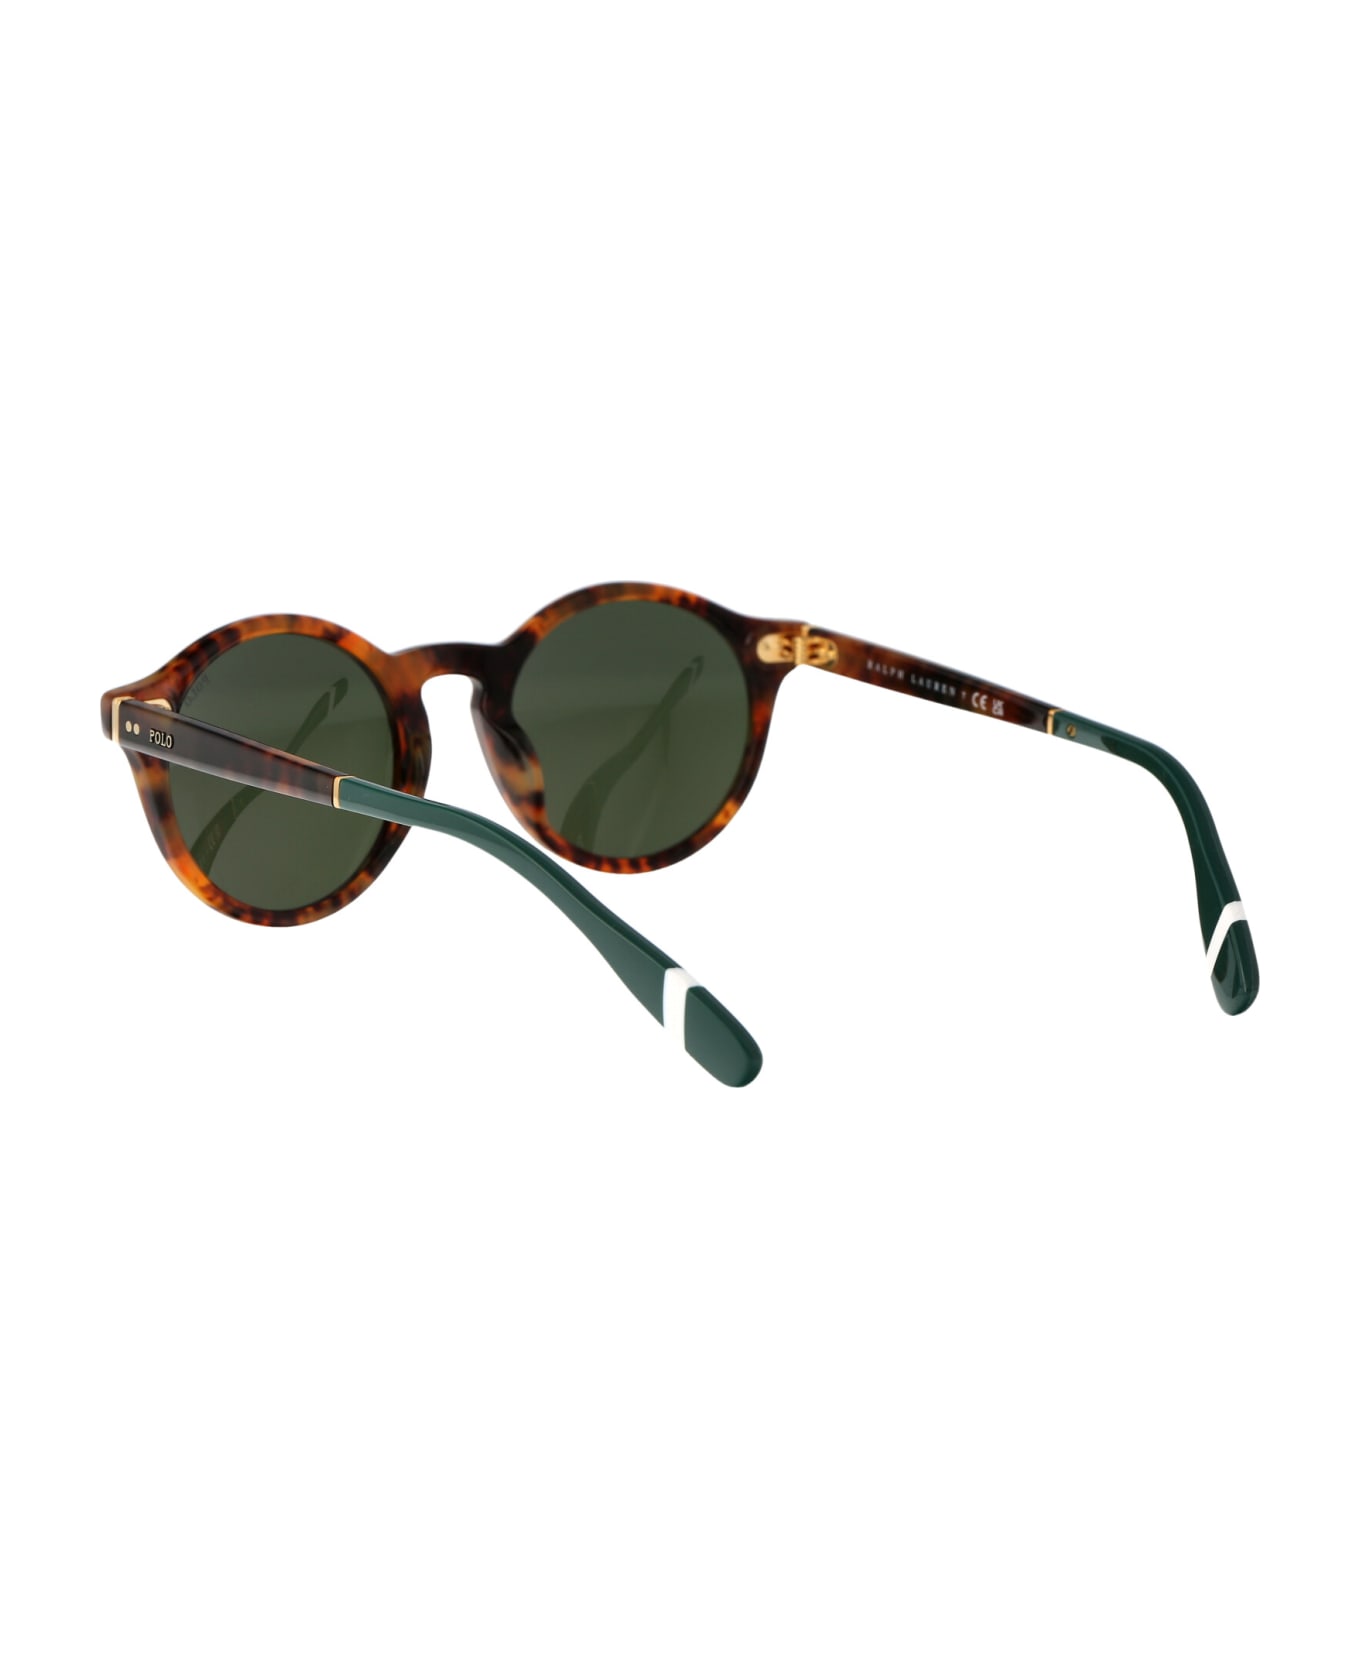 Polo Ralph Lauren 0ph4204u Sunglasses - 501771 Shiny Brown Tortoise